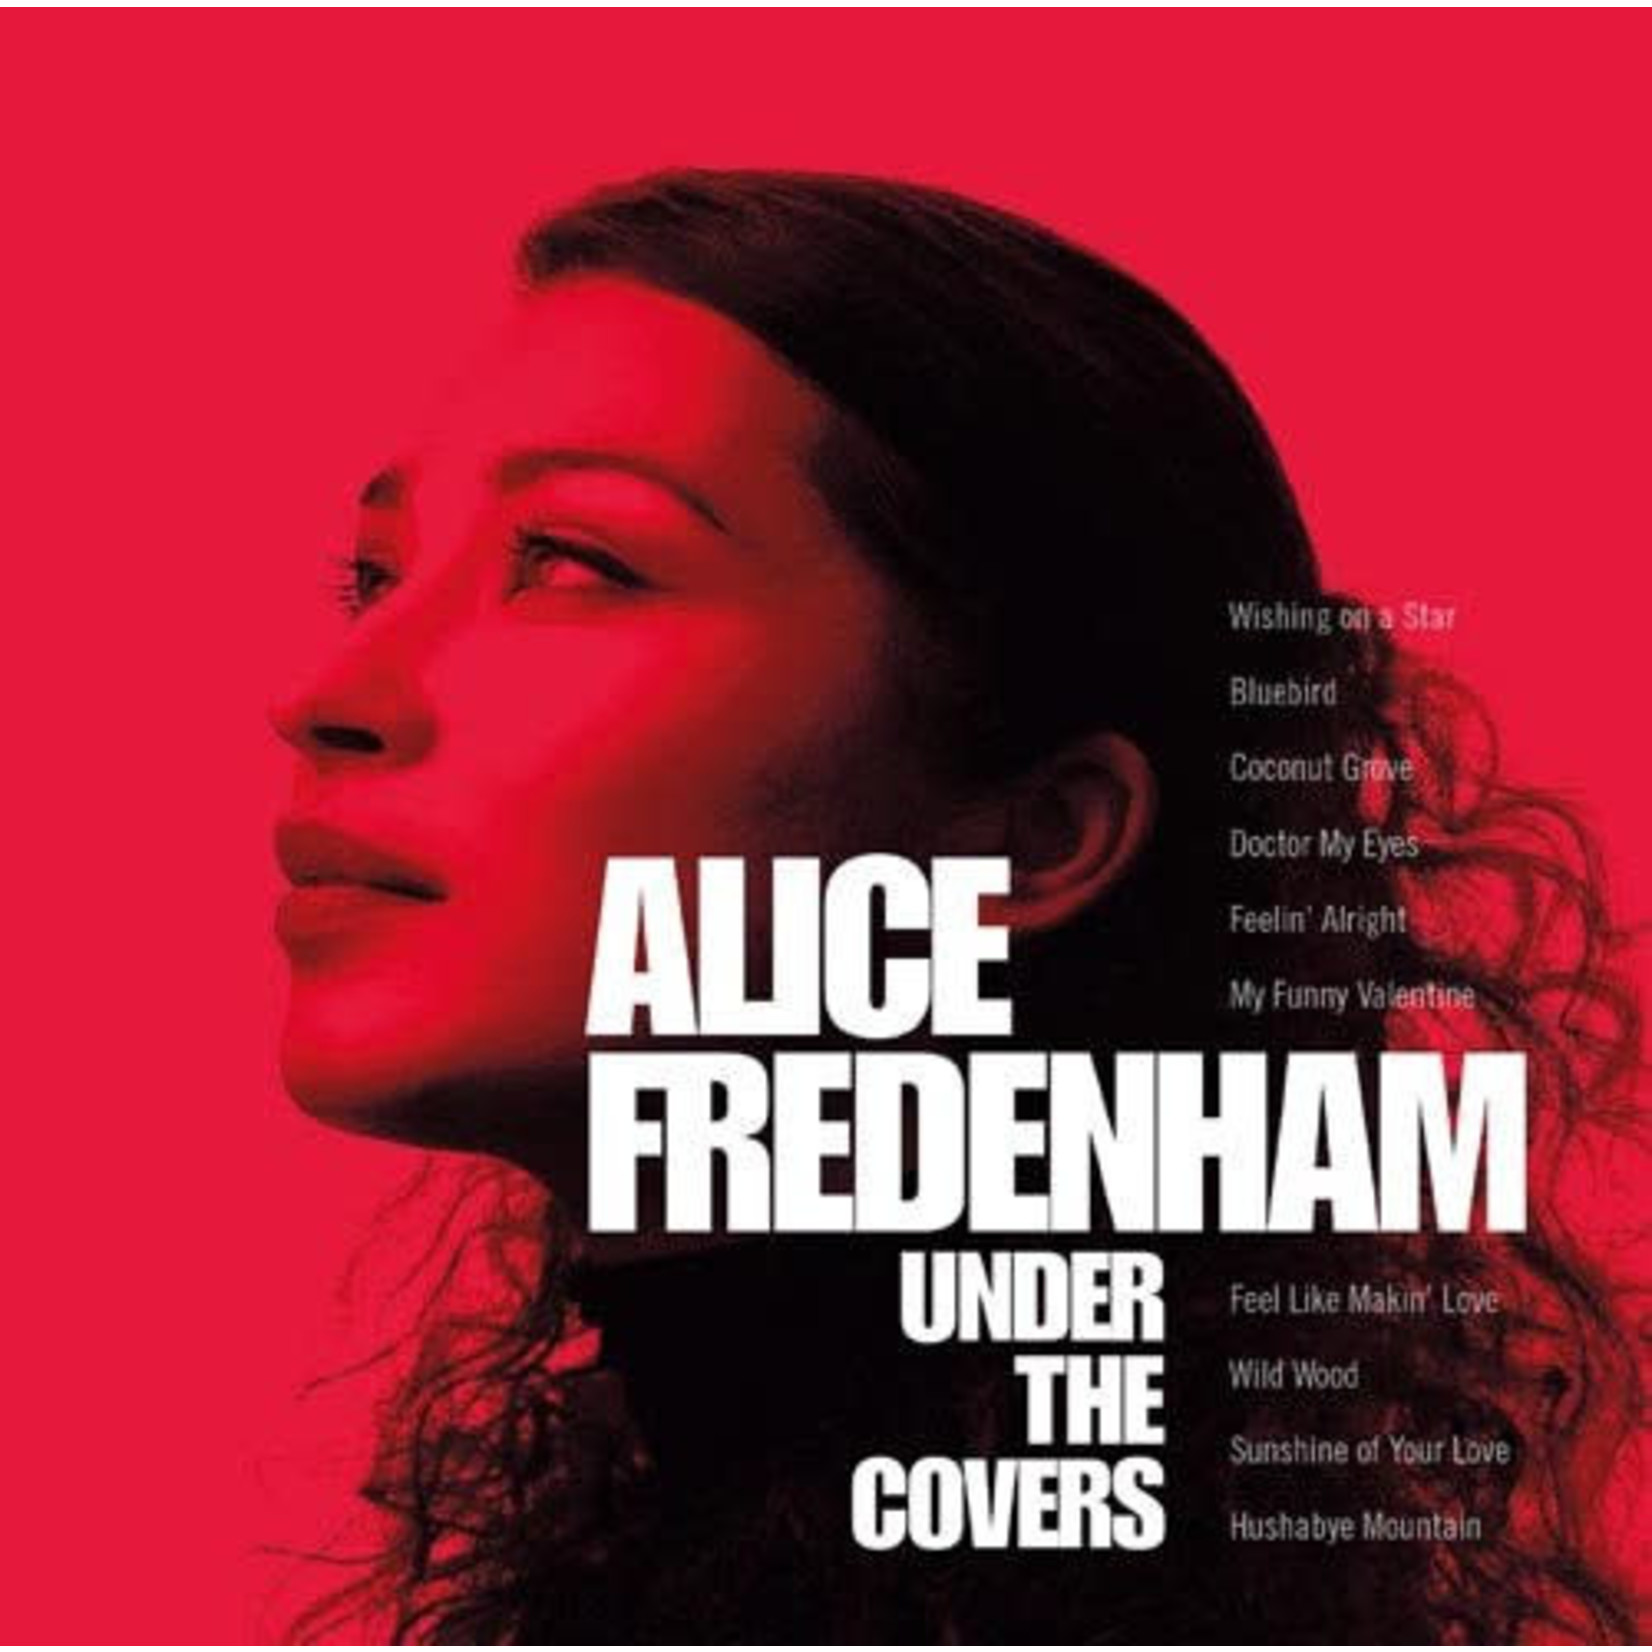 Alice Fredenham - Under The Covers (CD)